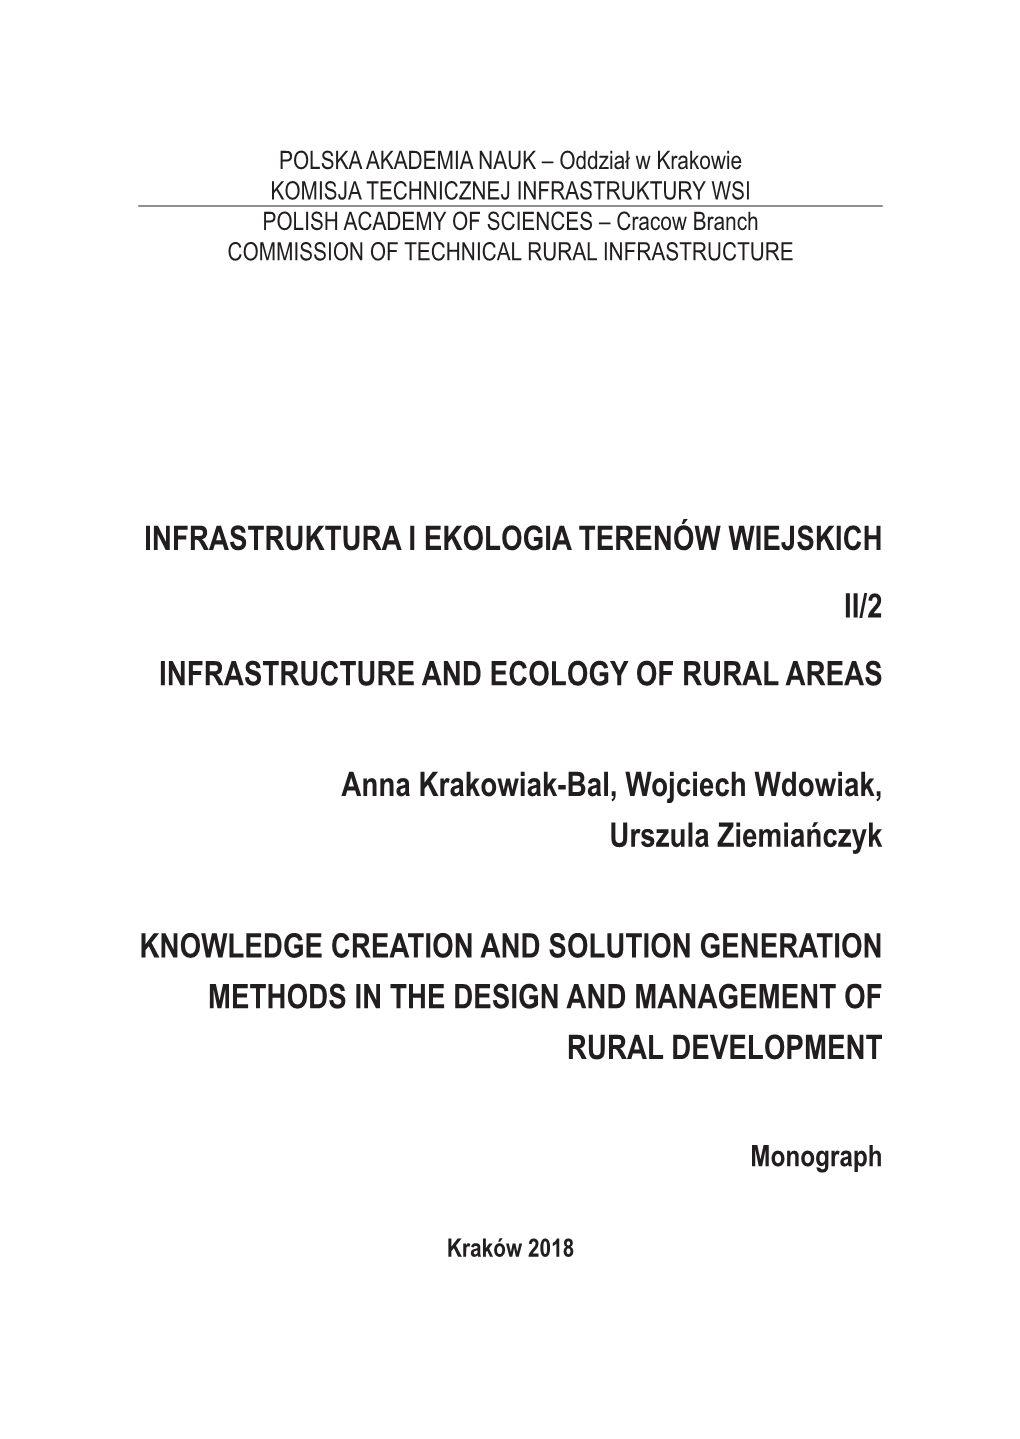 Infrastruktura I Ekologia Terenów Wiejskich Ii/2 Infrastructure and Ecology of Rural Areas